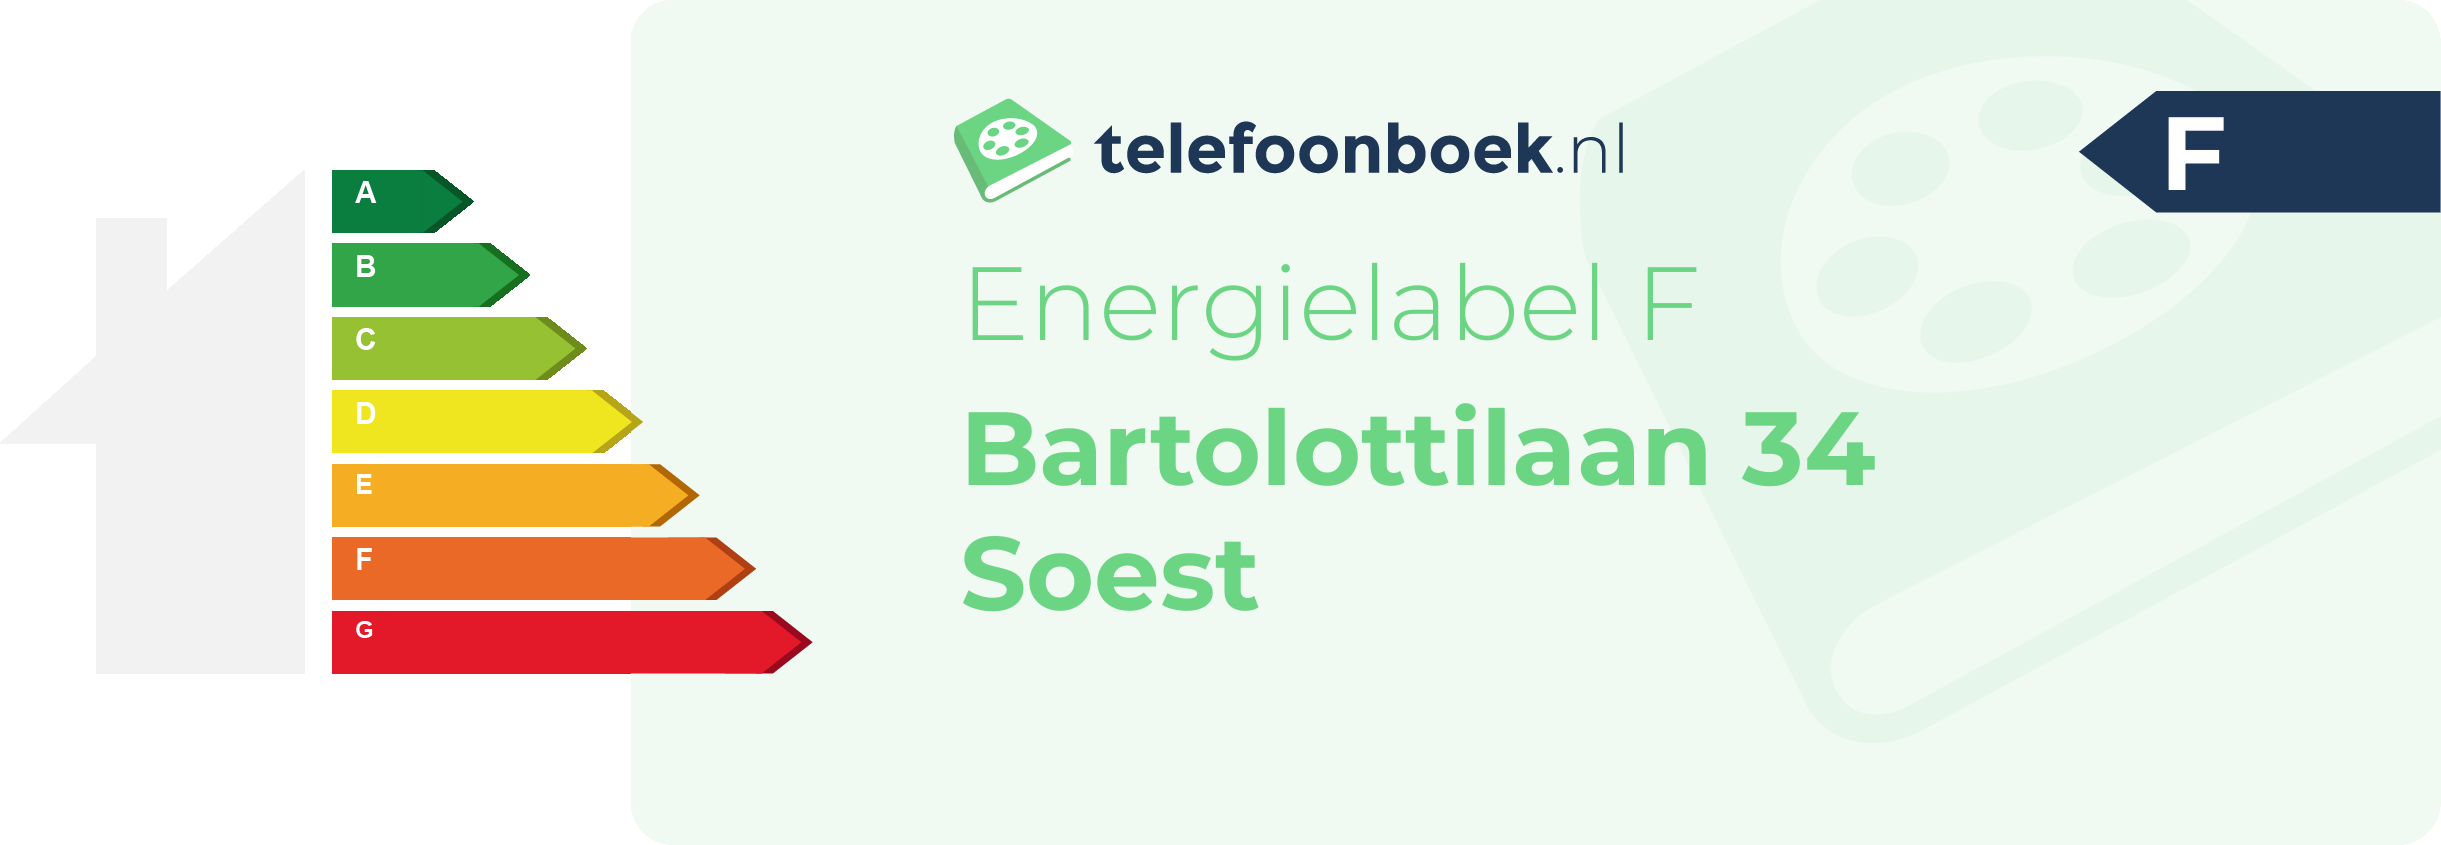 Energielabel Bartolottilaan 34 Soest